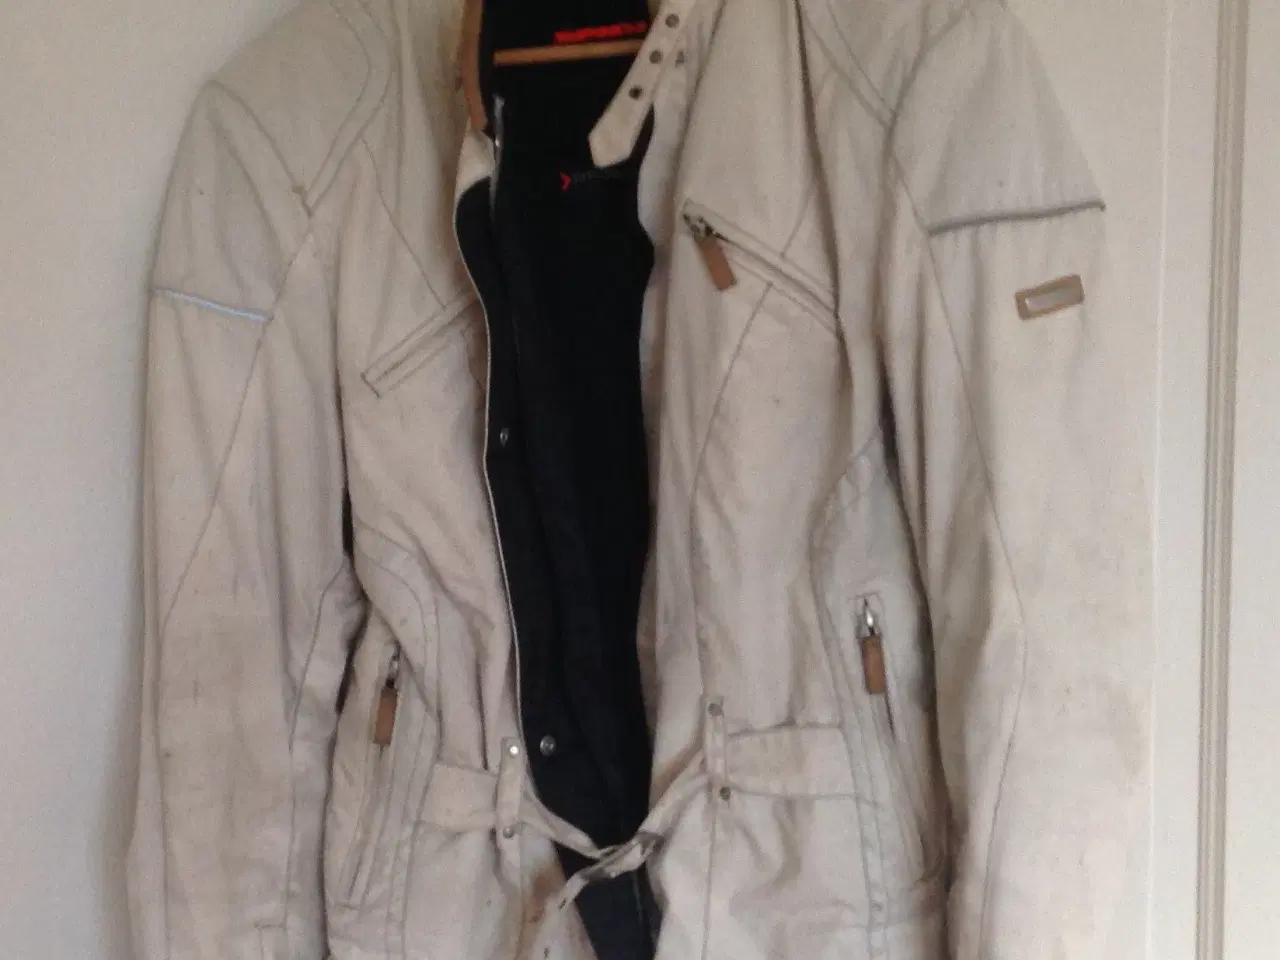 Billede 1 - SPID mc jakkke og buks. Pige, samlet pris 400 kr